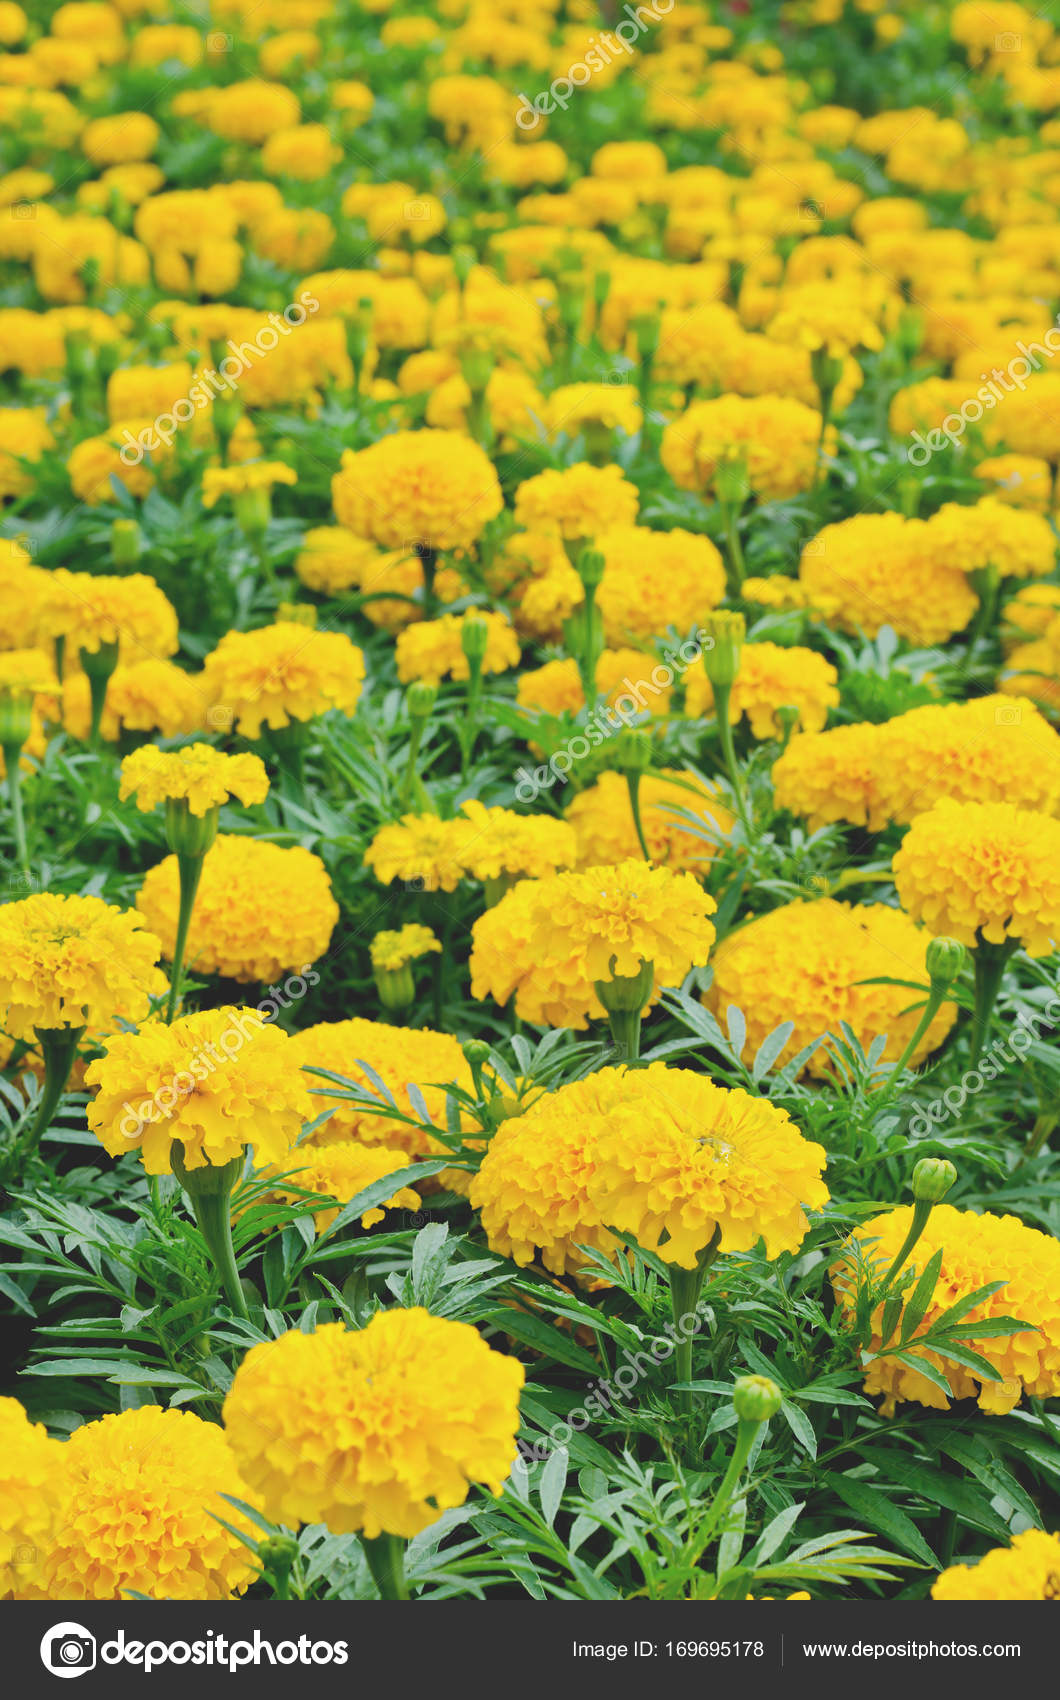 A Flower Bed Of Yellow Blooming Marigolds Growing In The Garden Stock Photo C Bentaboe 169695178